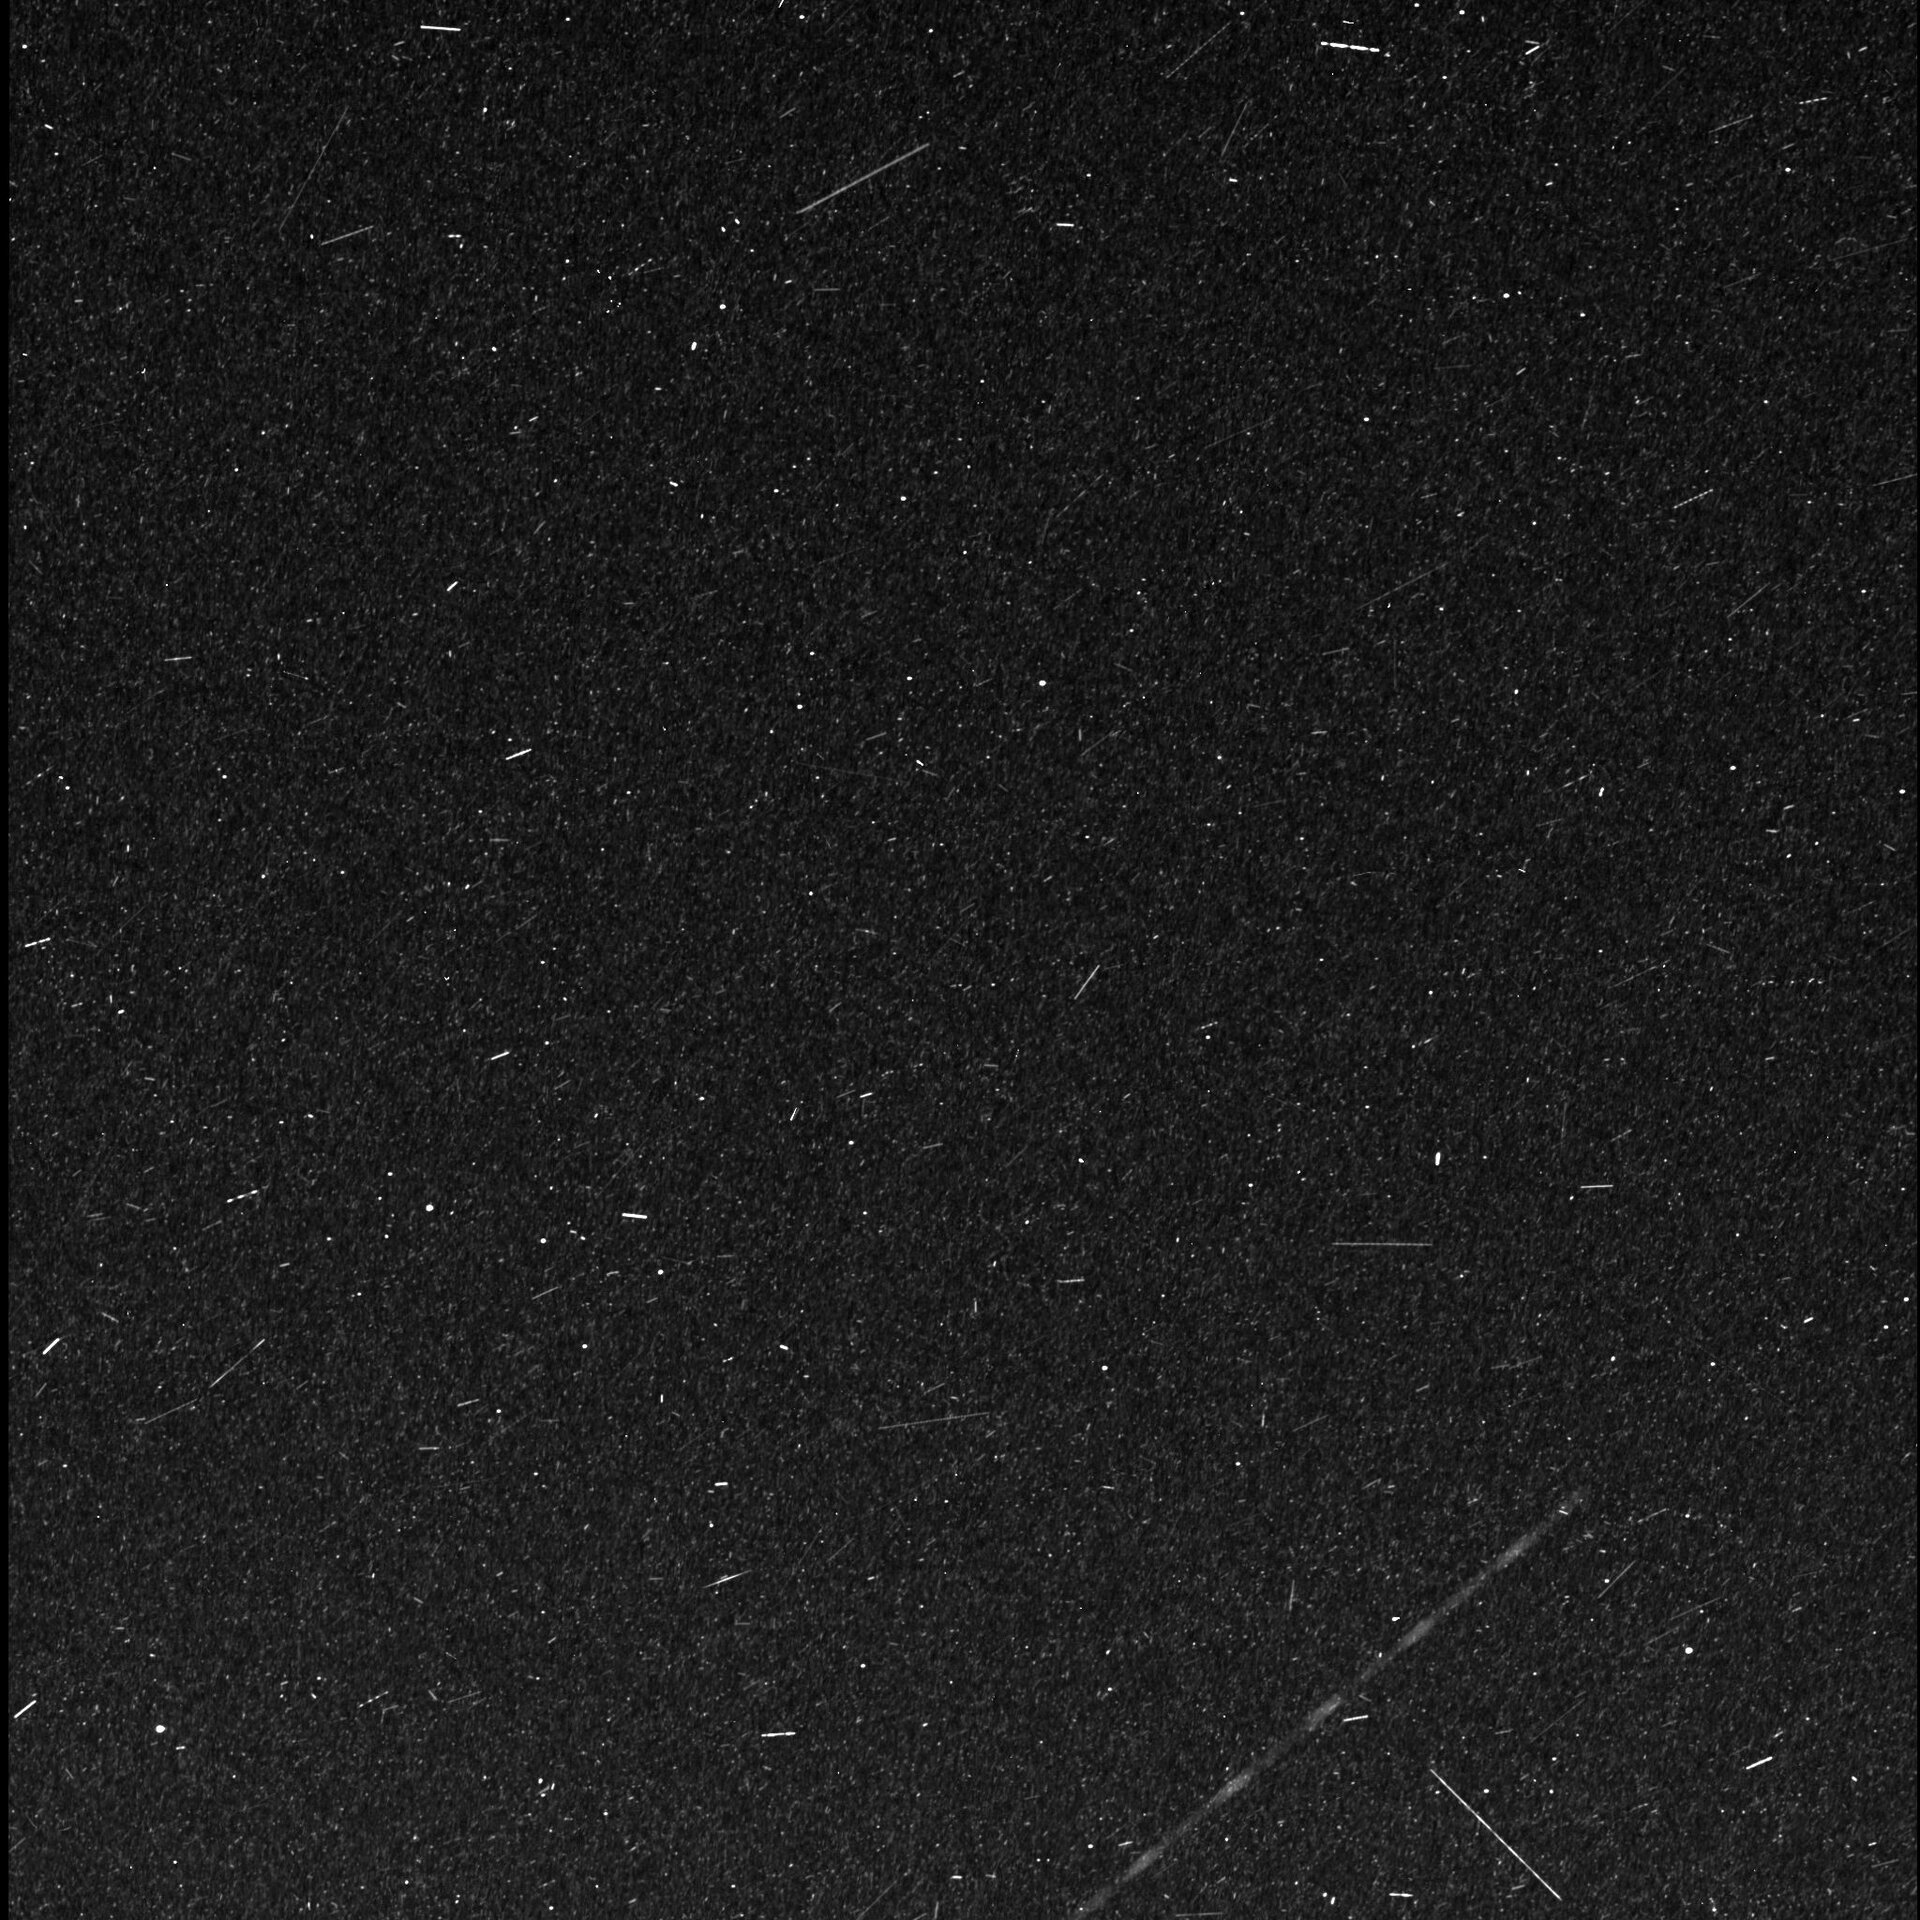 Comet dust environment on 10 December 2015 